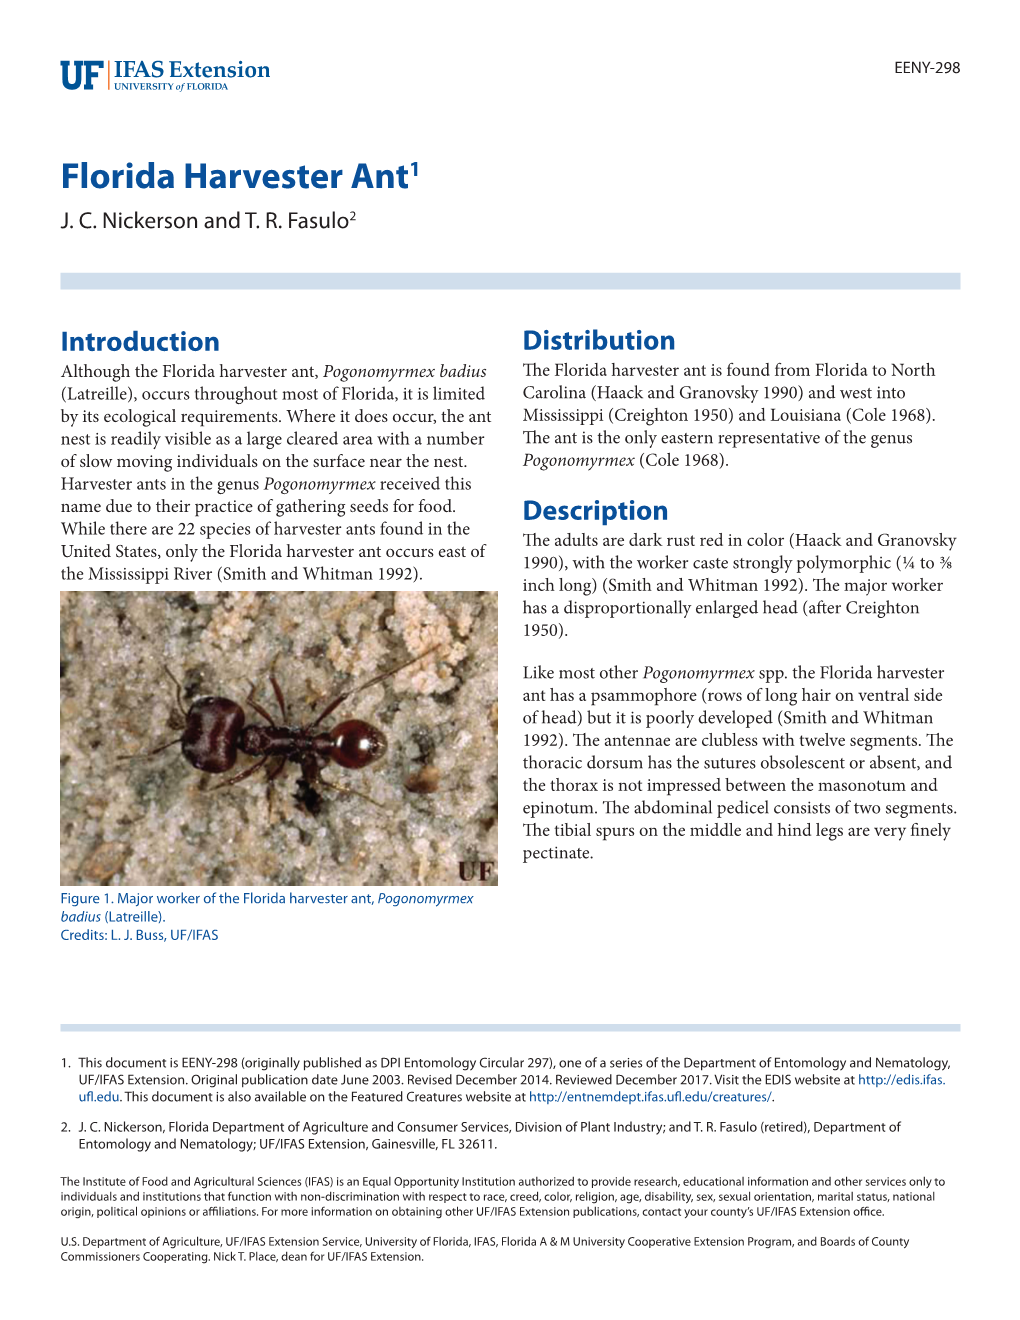 Florida Harvester Ant1 J